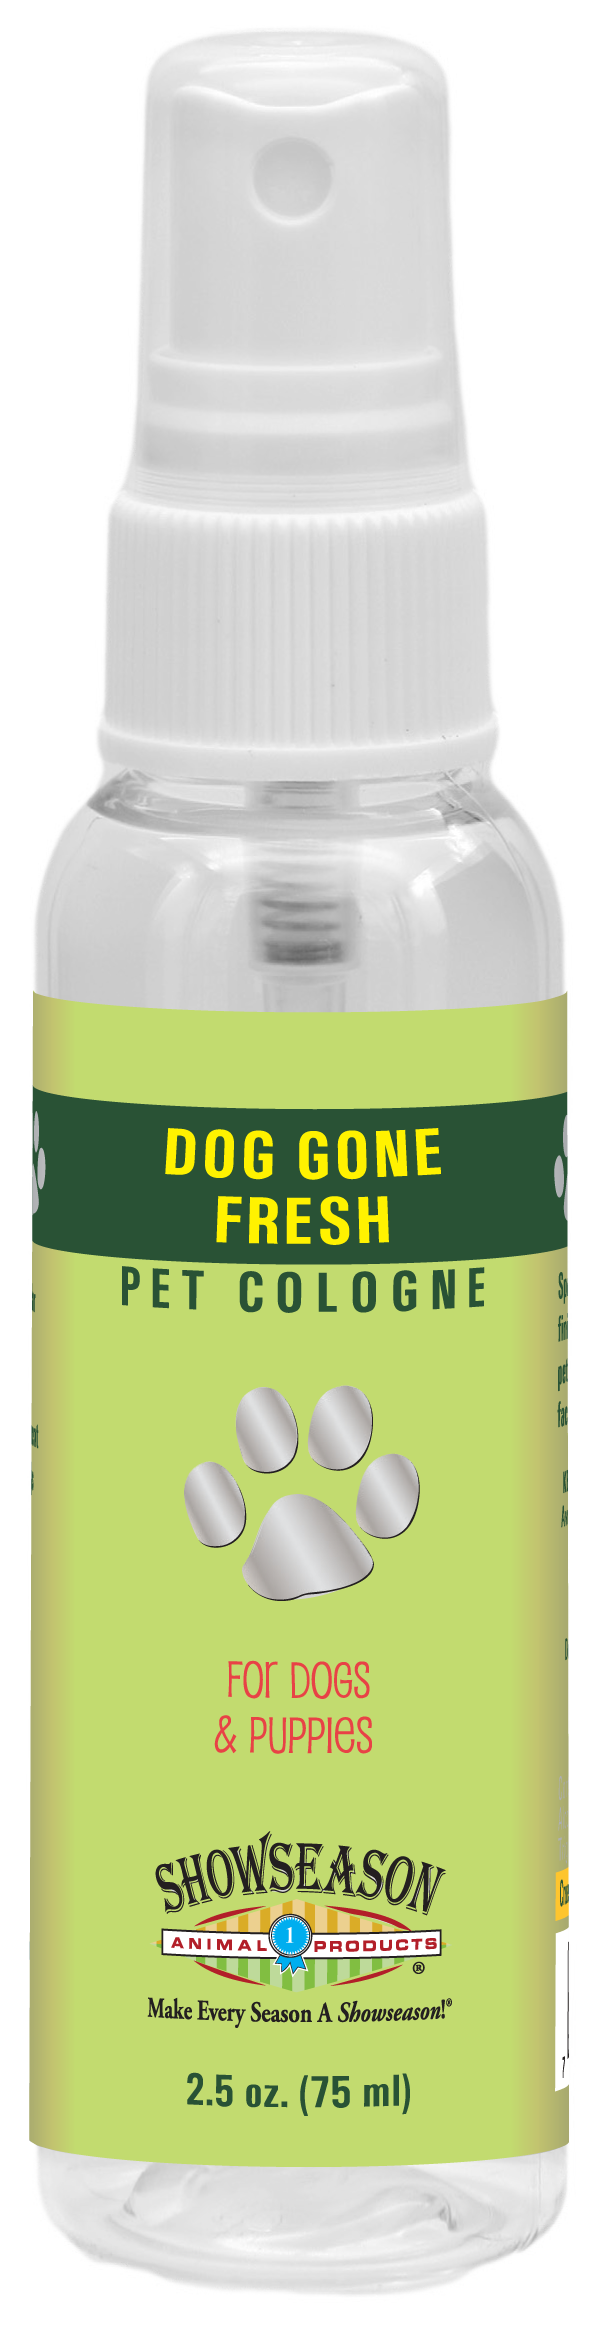 Dog Gone Fresh Pet Cologne | Showseason®